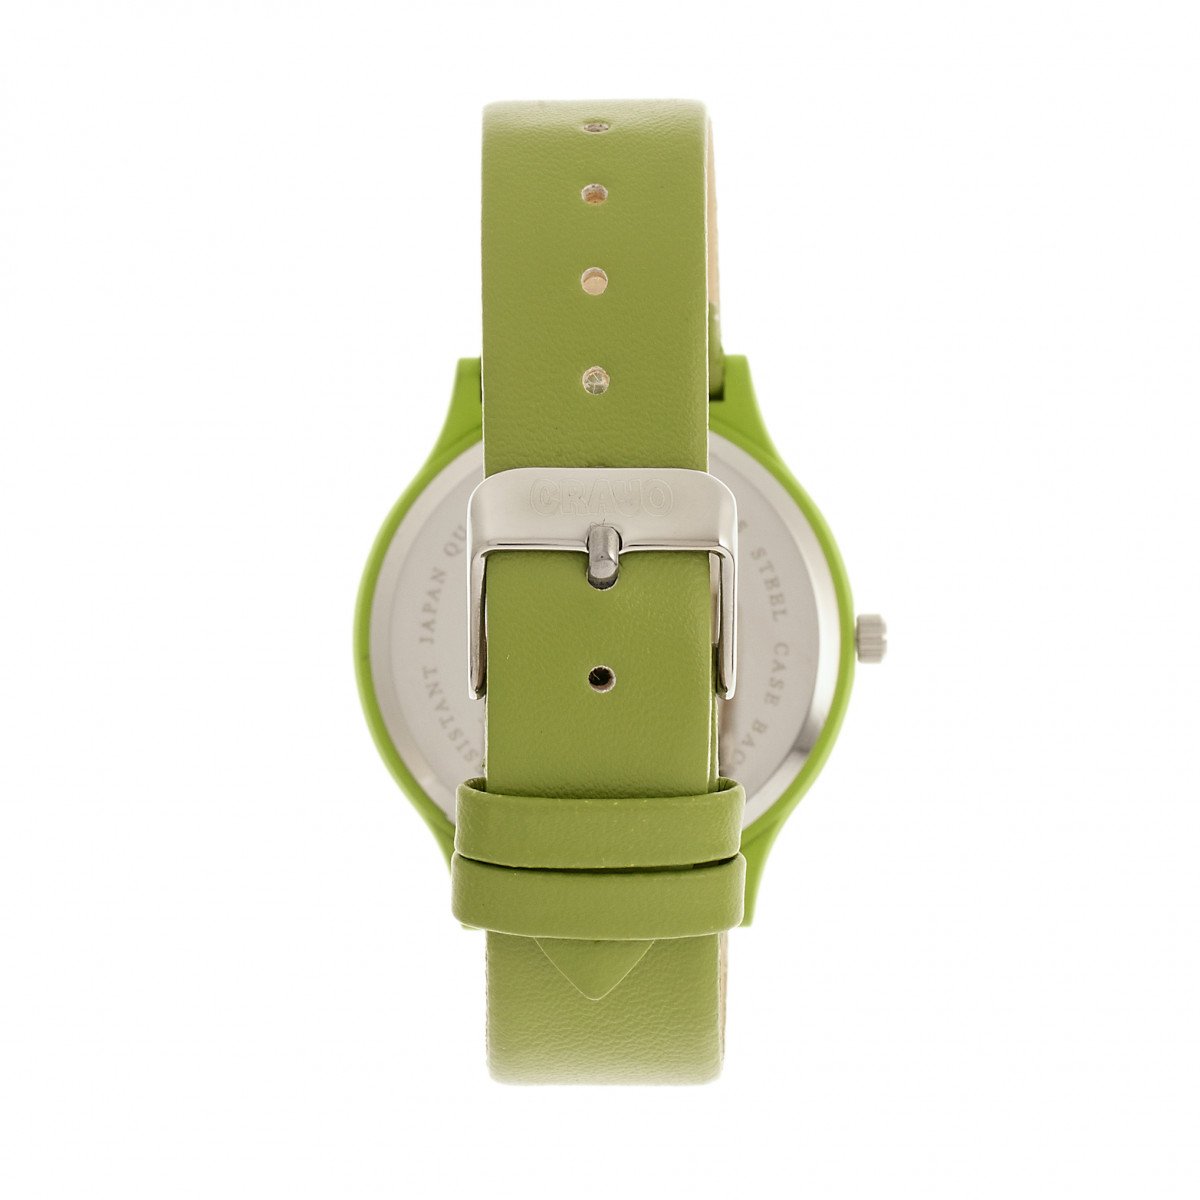 Crayo Trinity Unisex Watch - Green - CRACR4403